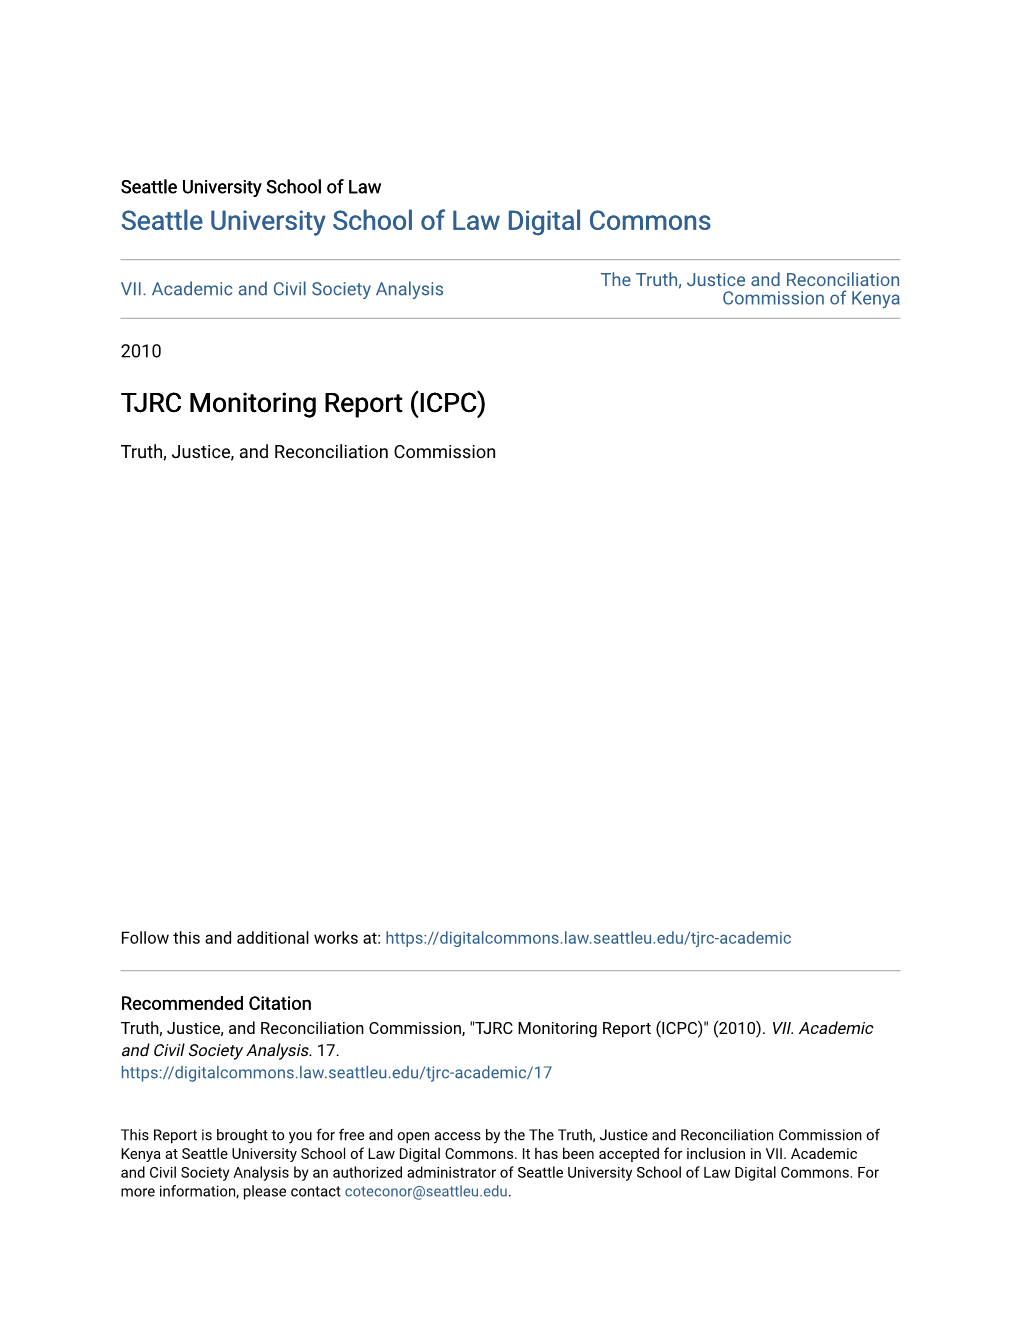 TJRC Monitoring Report (ICPC)